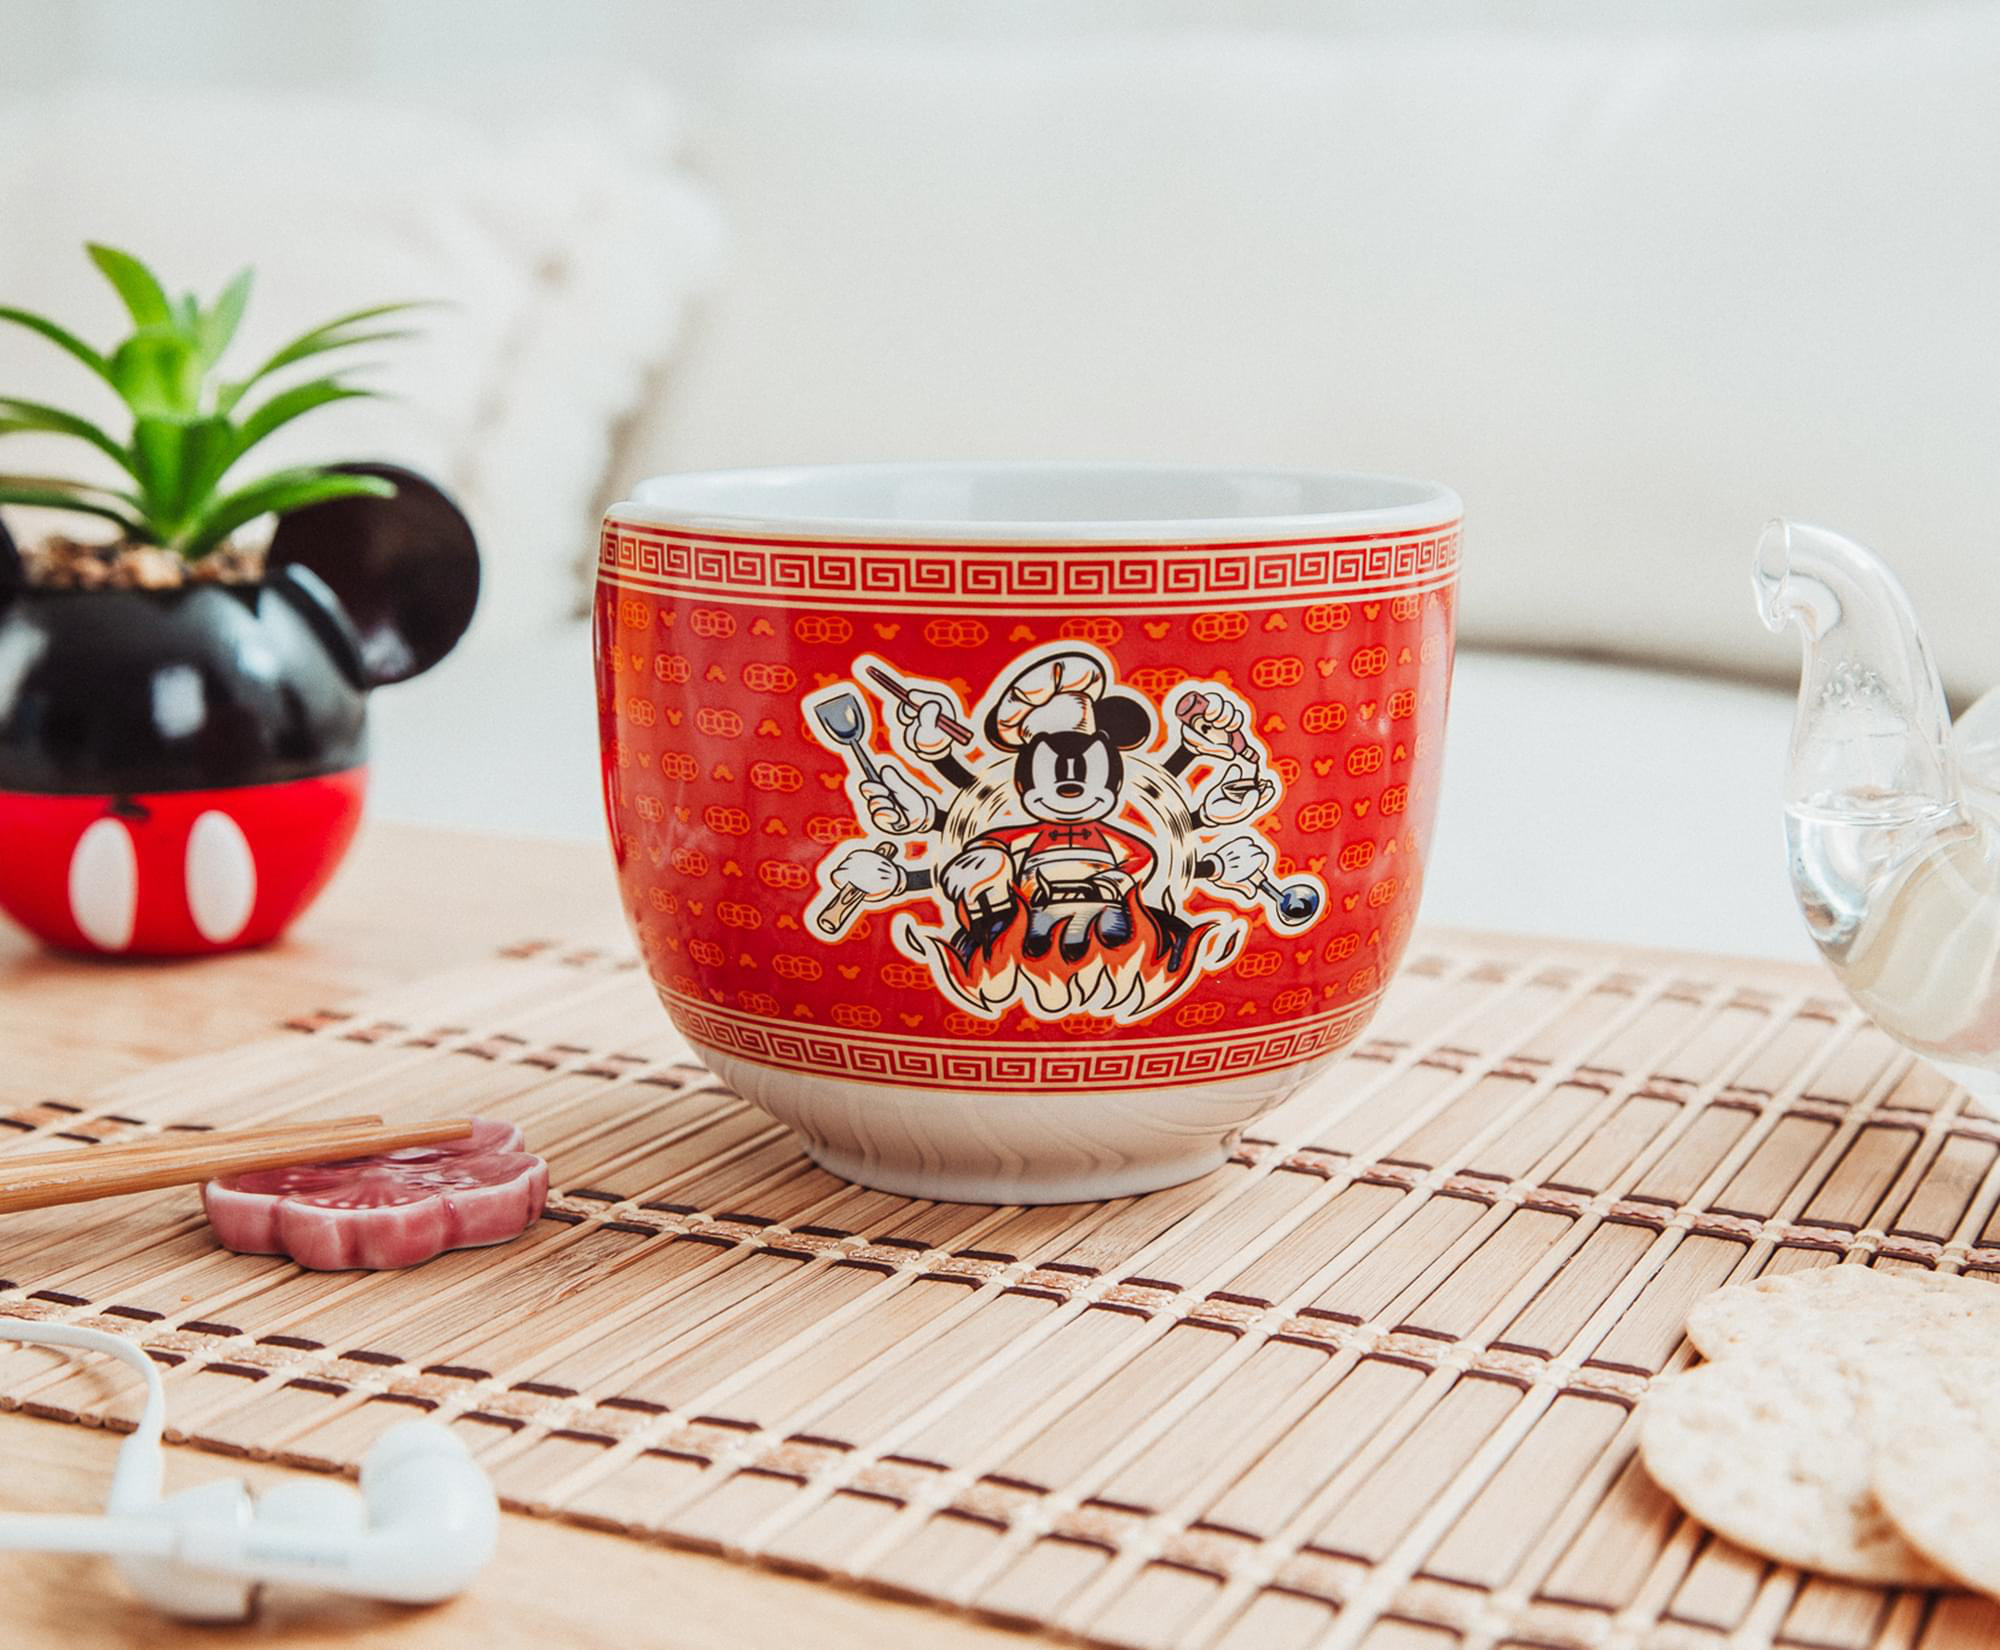 Disney Mickey Mouse Red Single Serve Coffee Maker New Includes 12 oz Mickey  Mug